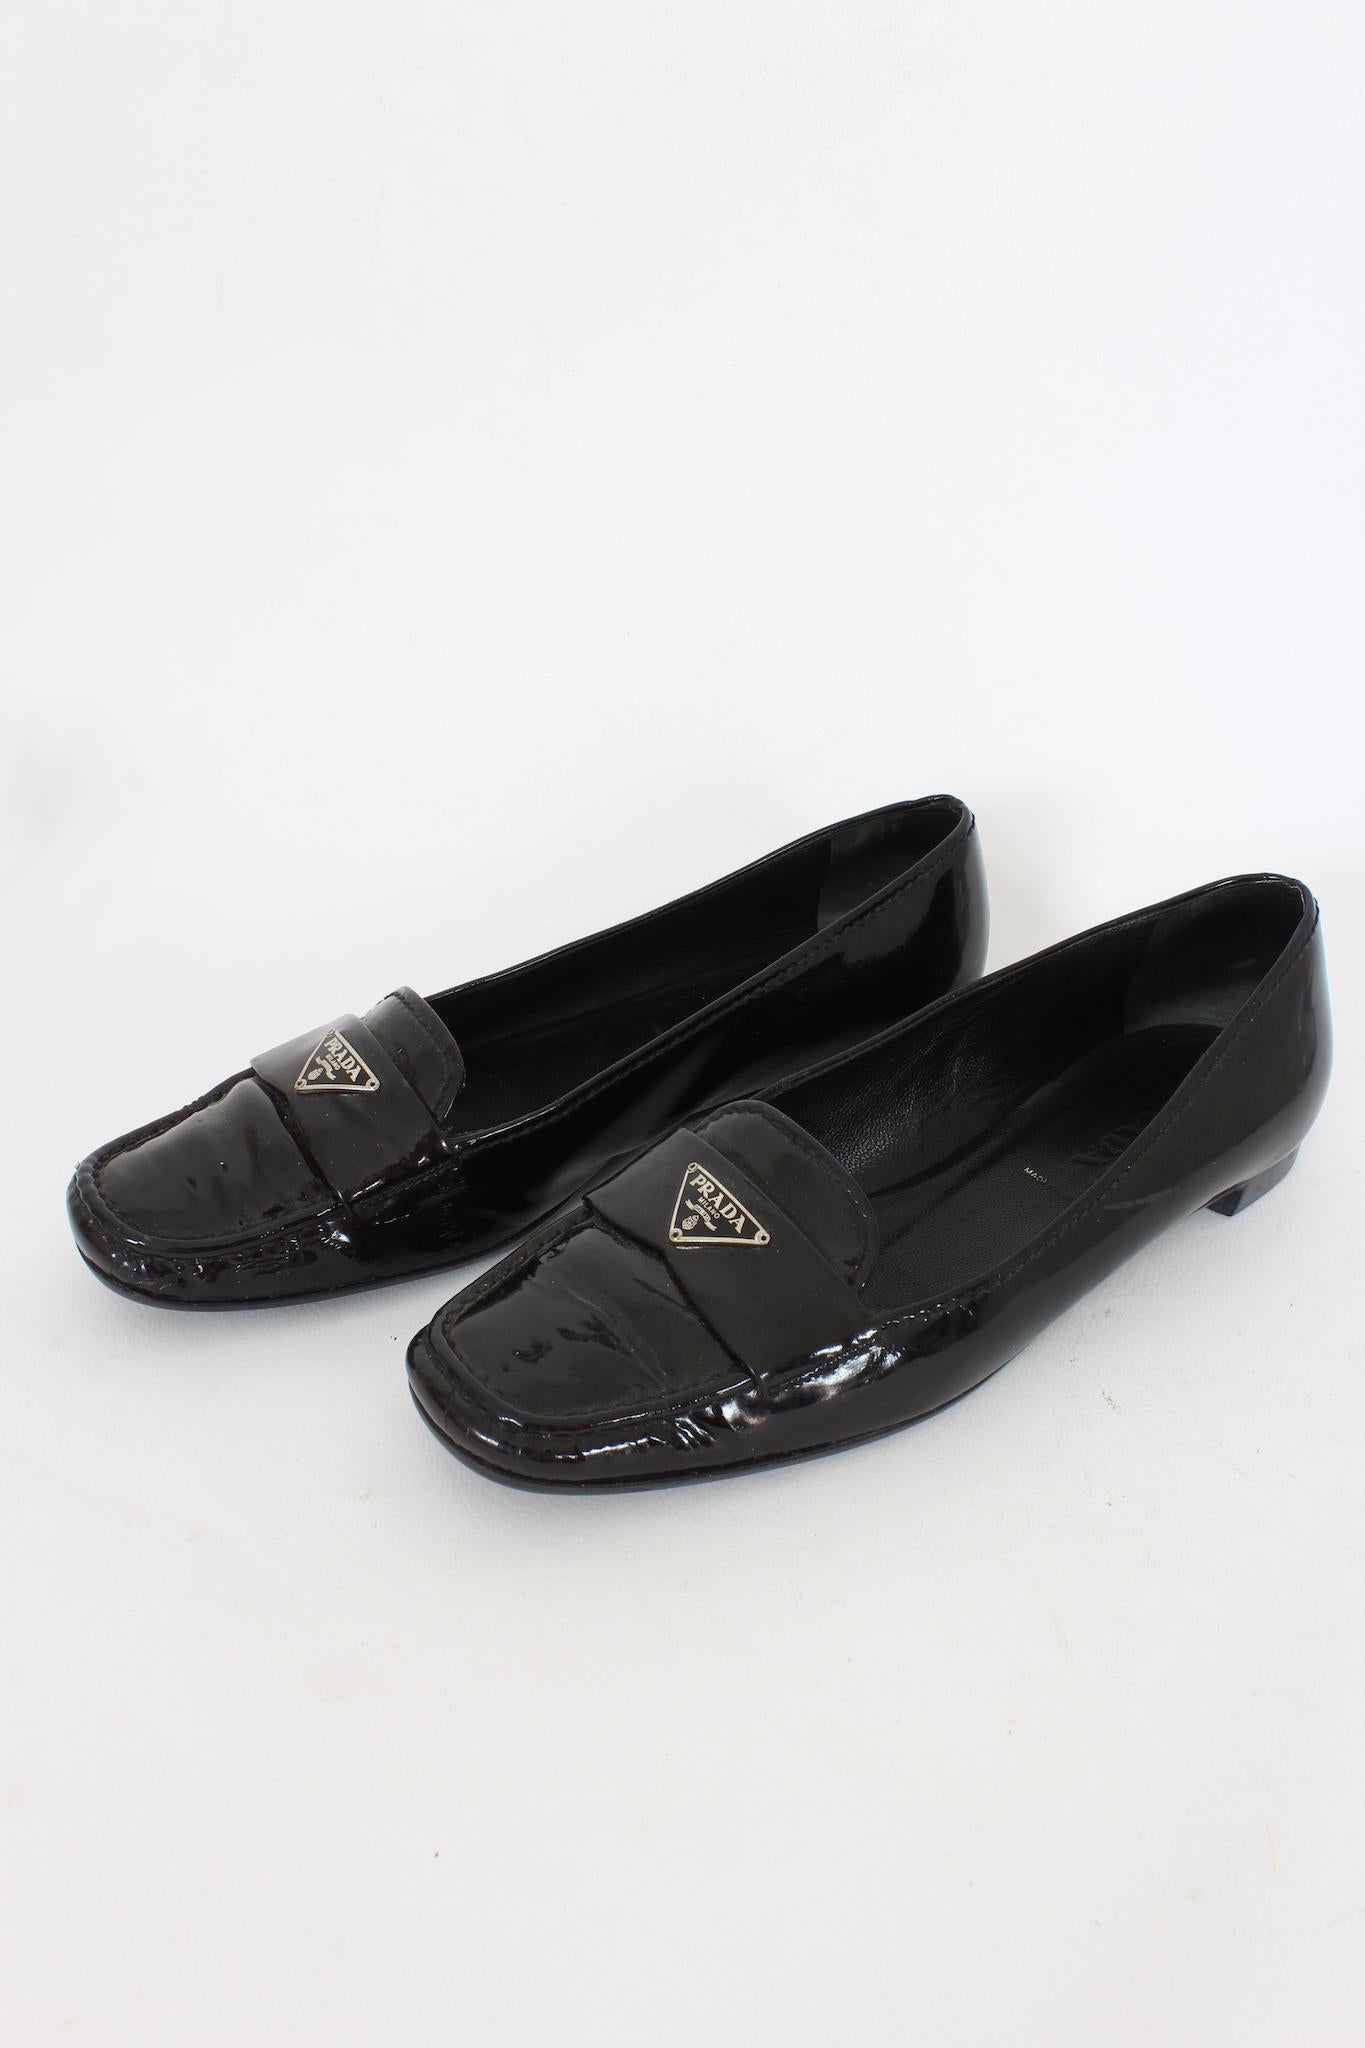 Prada Black Patent Leather Vintage Moccasins Shoes 90s 2